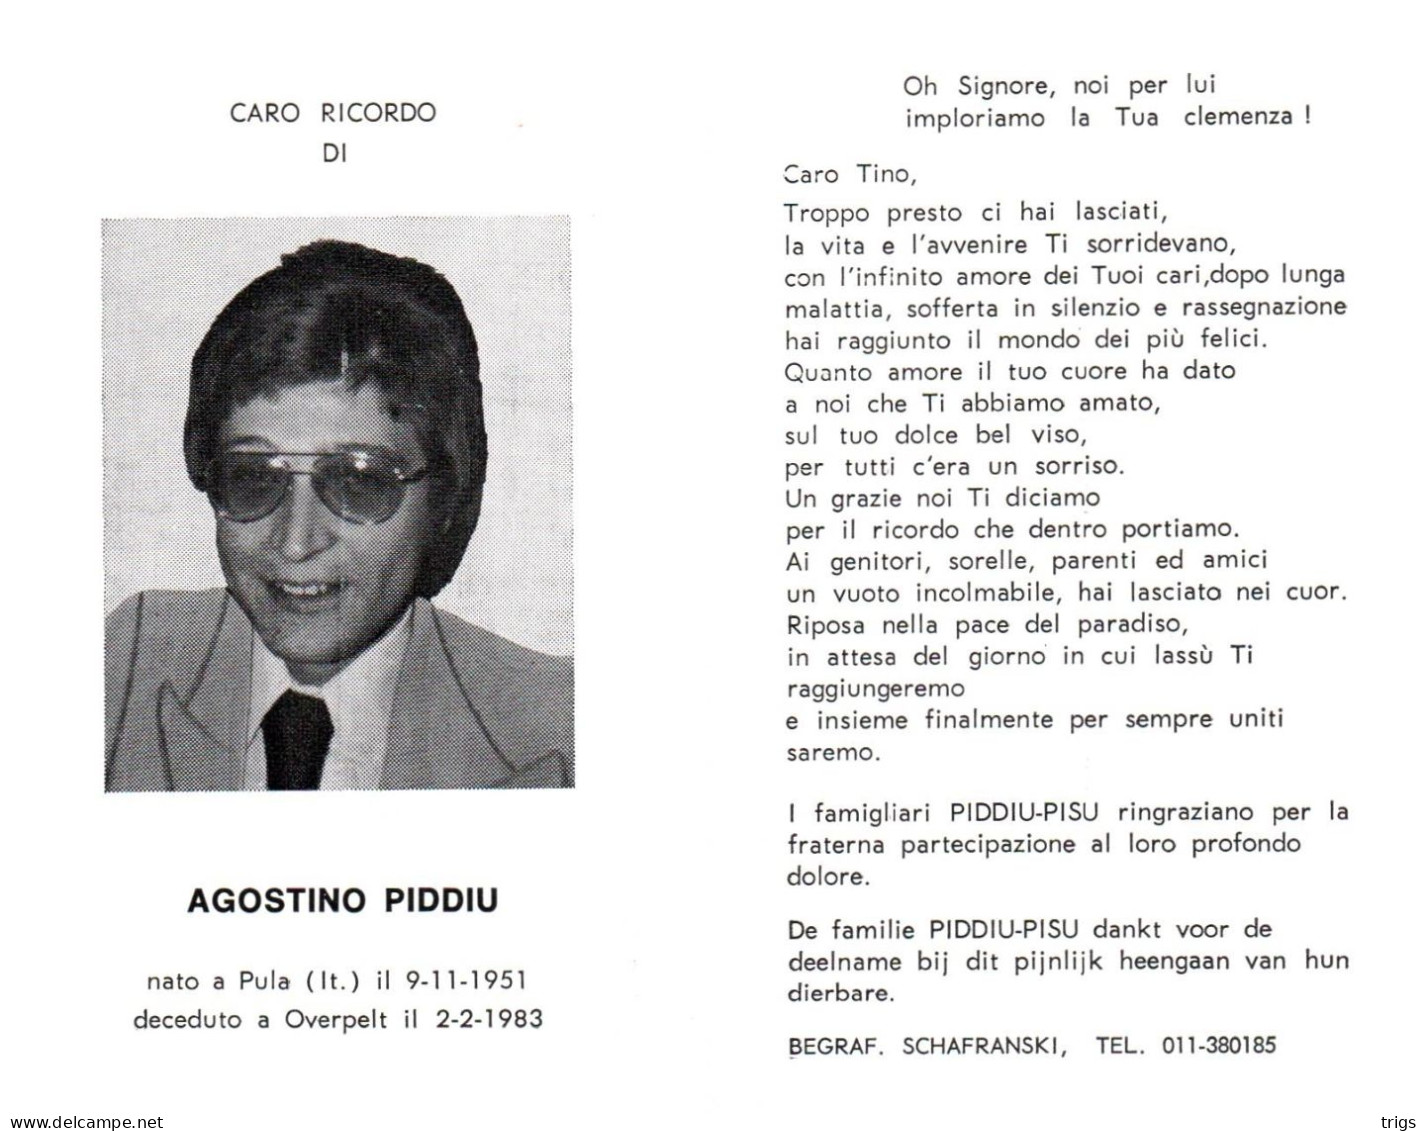 Agostino Piddiu (1951-1983) - Andachtsbilder